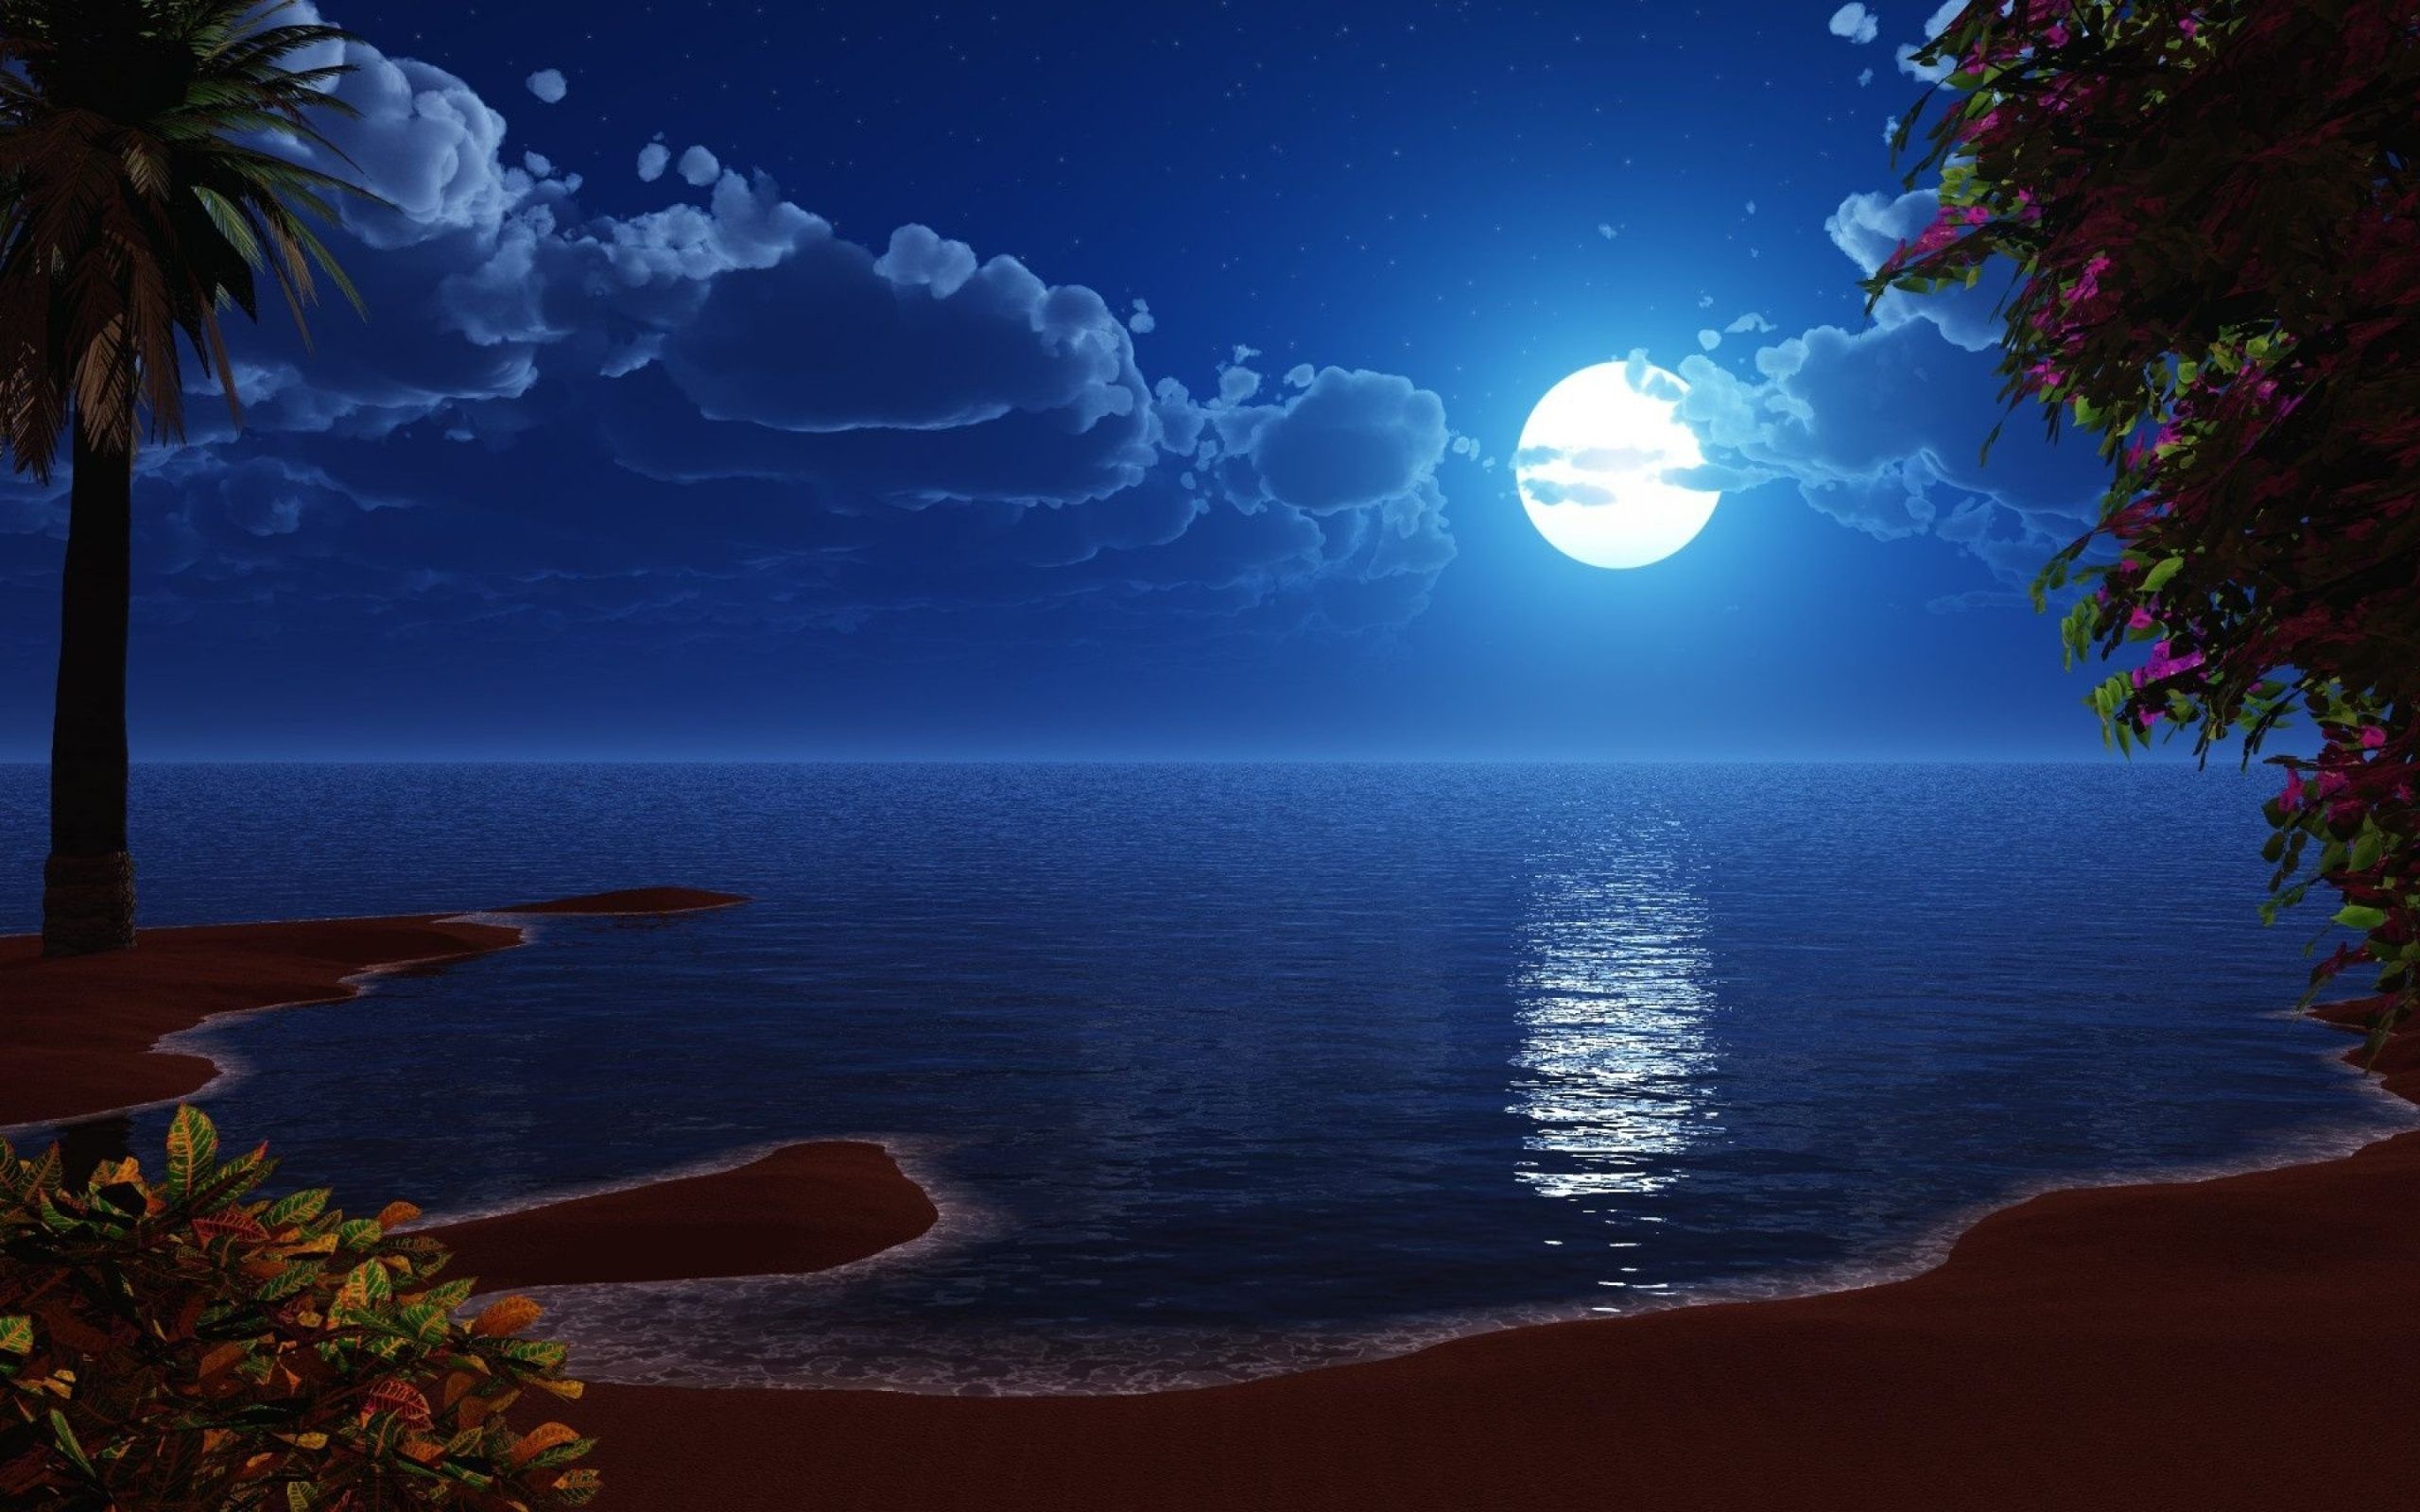 Lake View Moon Night Wallpaper HD Download Of Night SKy